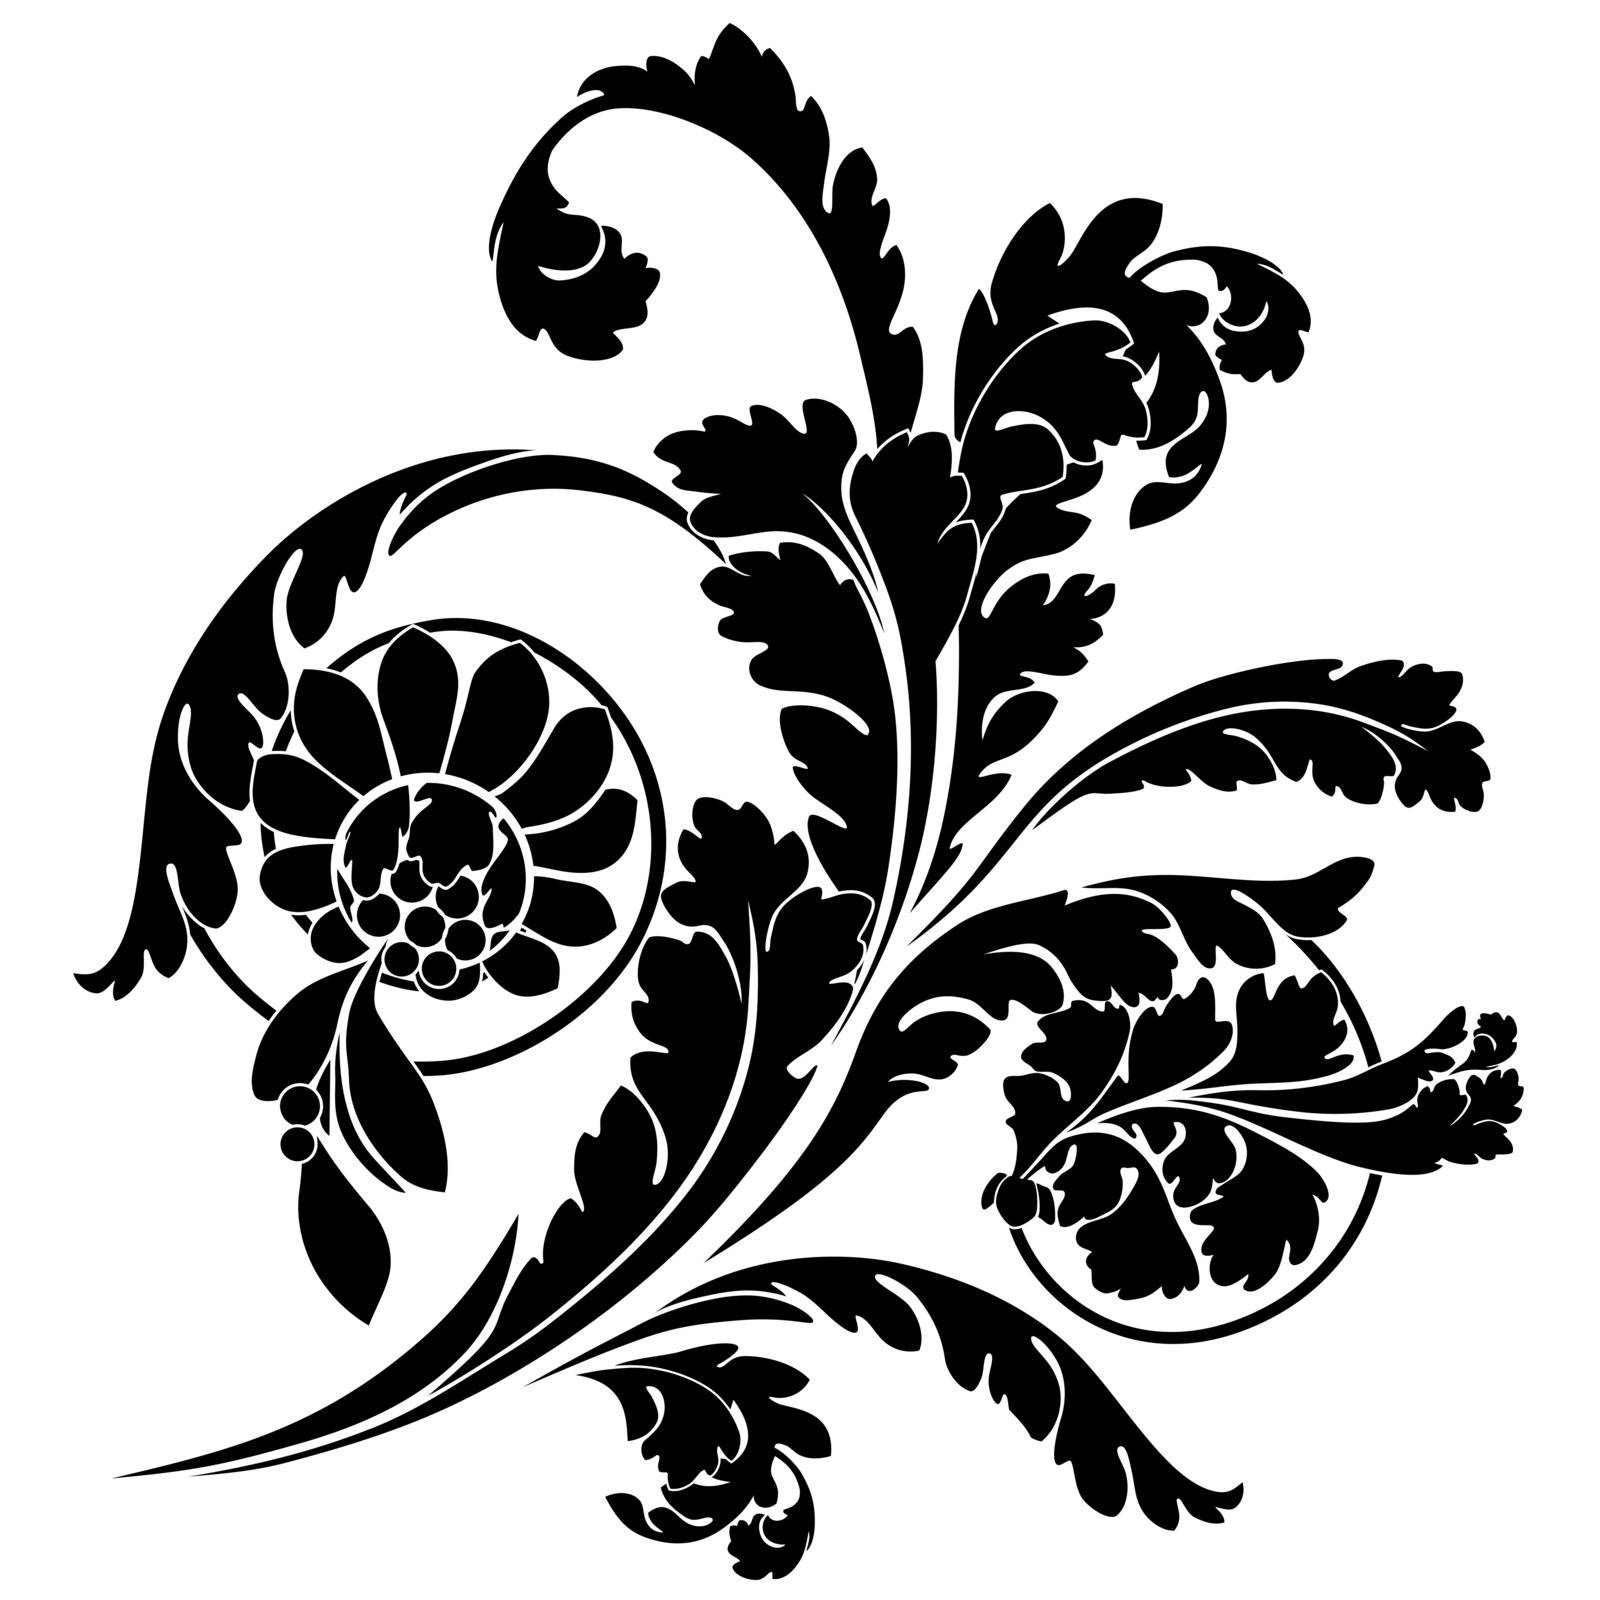 Swirls and flowers. Elegance vector illustration in black.